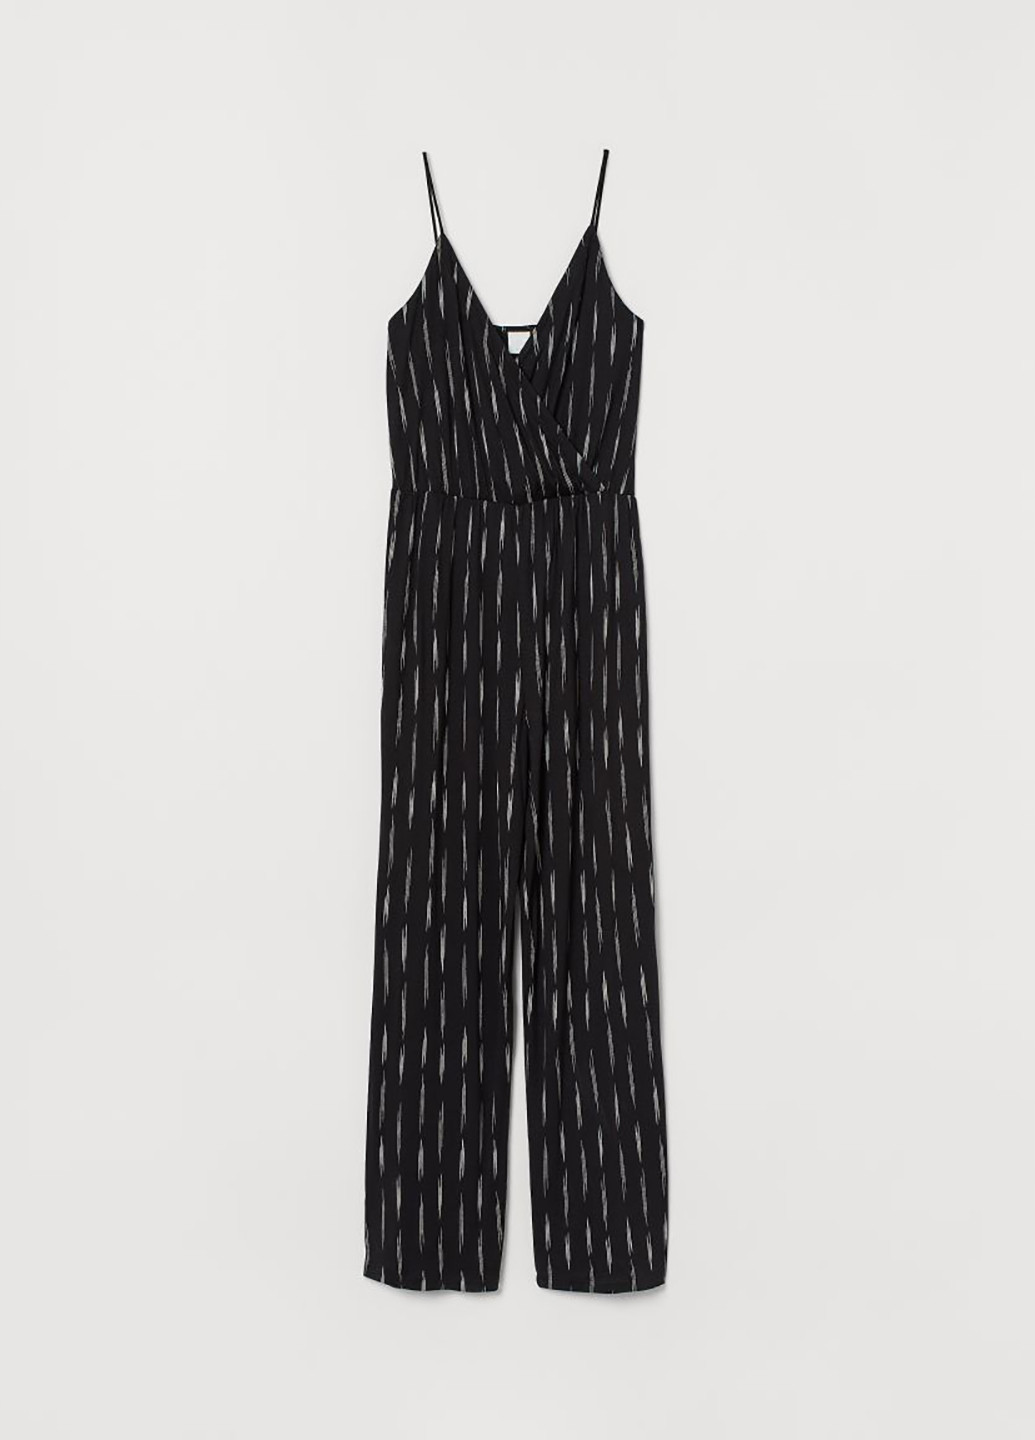 Комбинезон H&M комбинезон-брюки полоска чёрный кэжуал вискоза